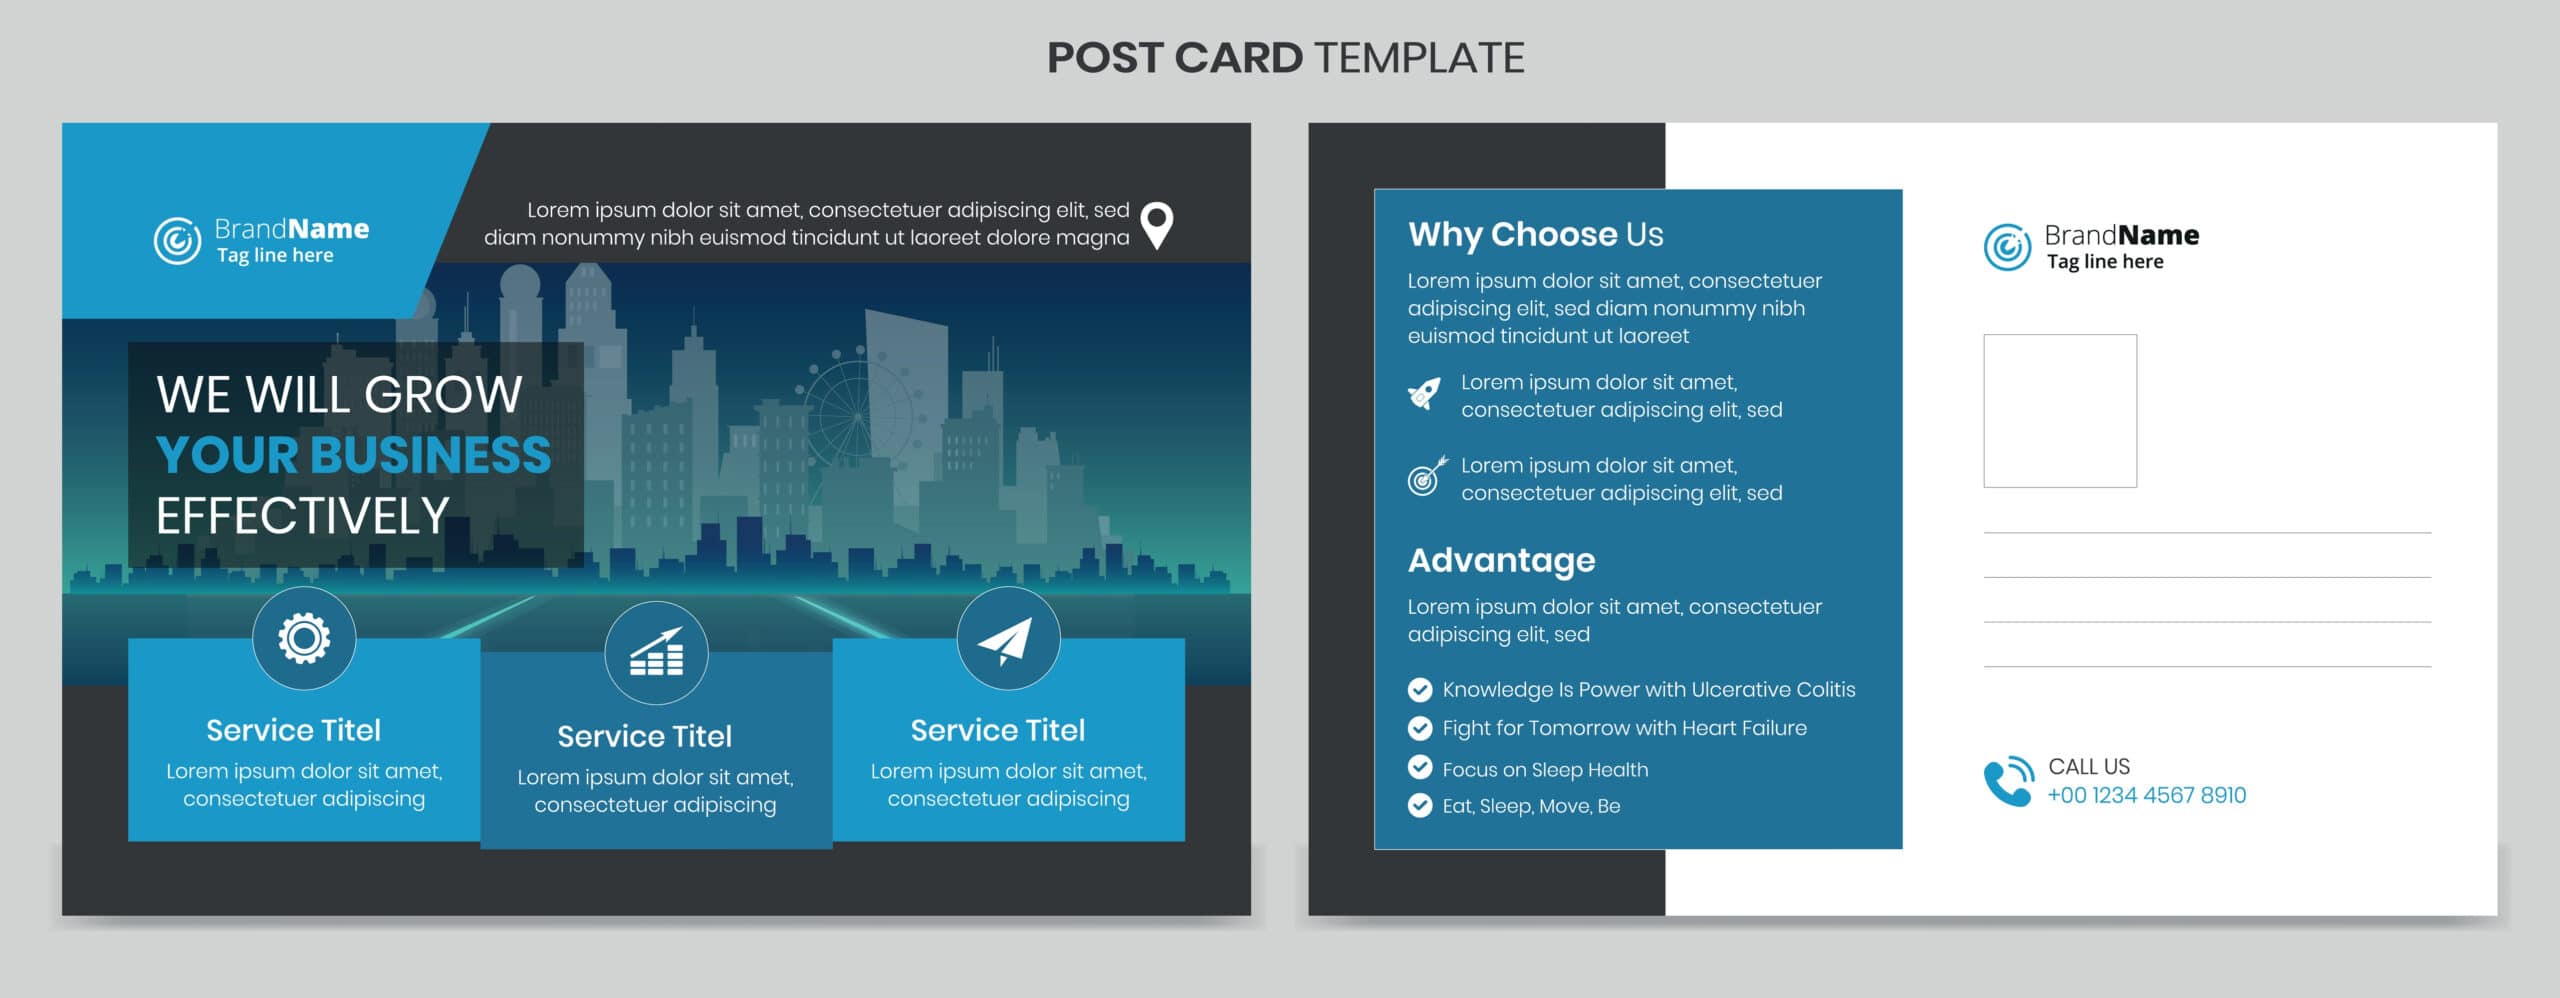 Corporate business postcard, fashion post card template, fitness postcard design template.